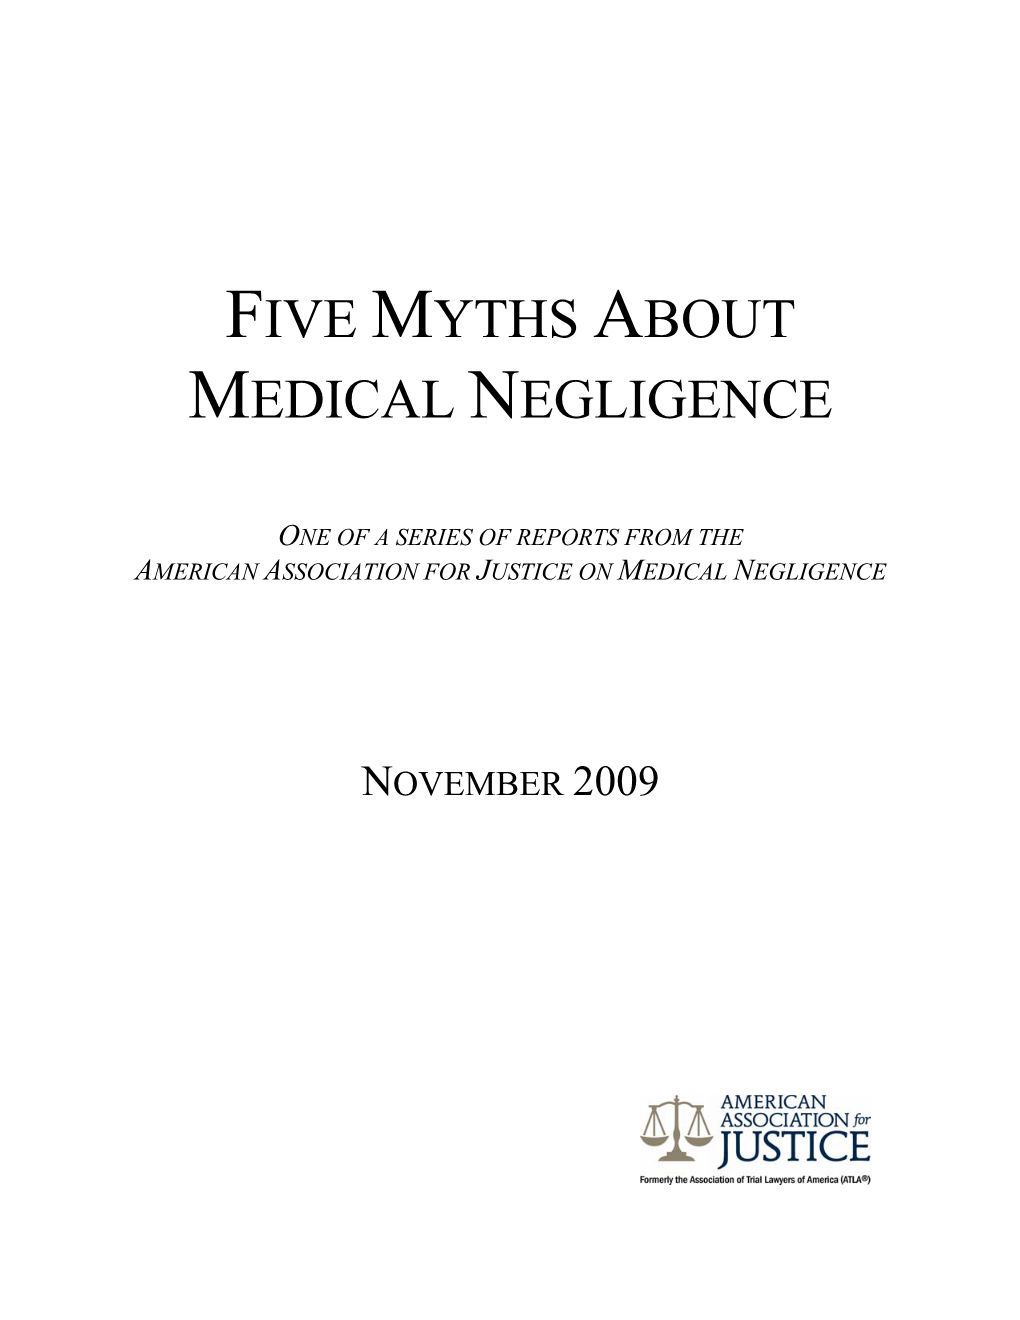 Five Myths About Medical Malpractice